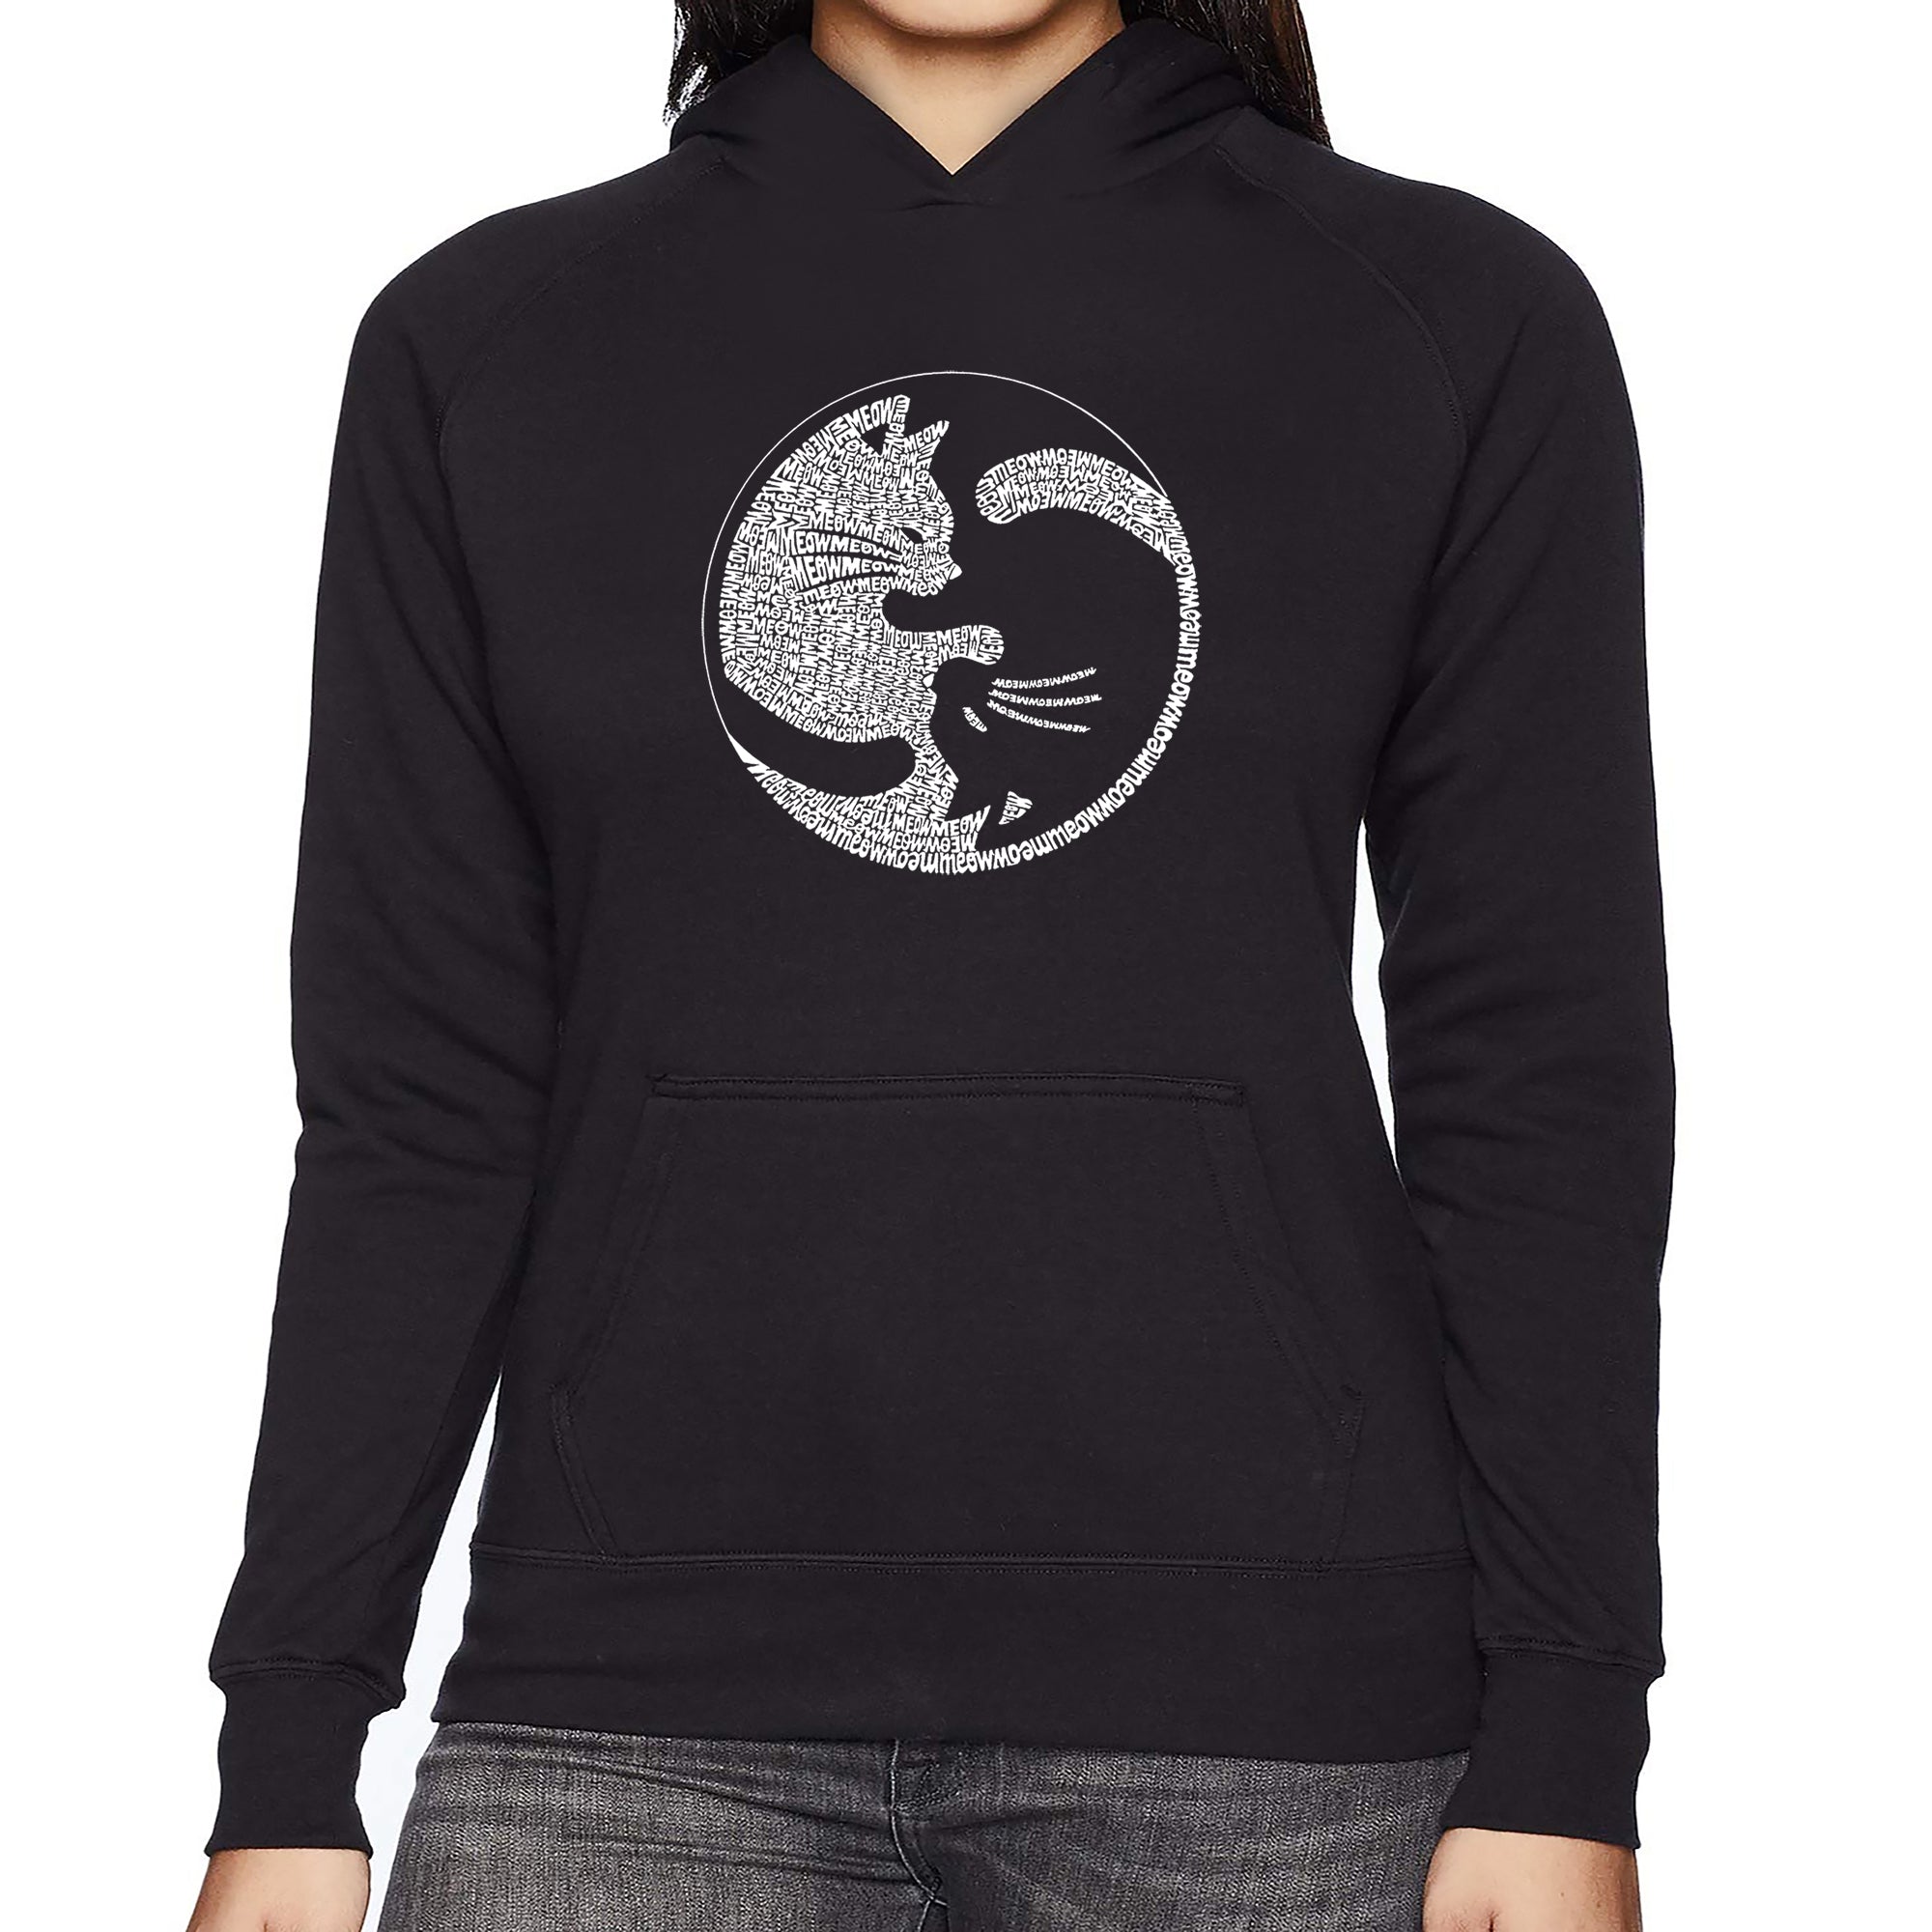 Yin Yang Cat - Women's Word Art Hooded Sweatshirt - Black - Small